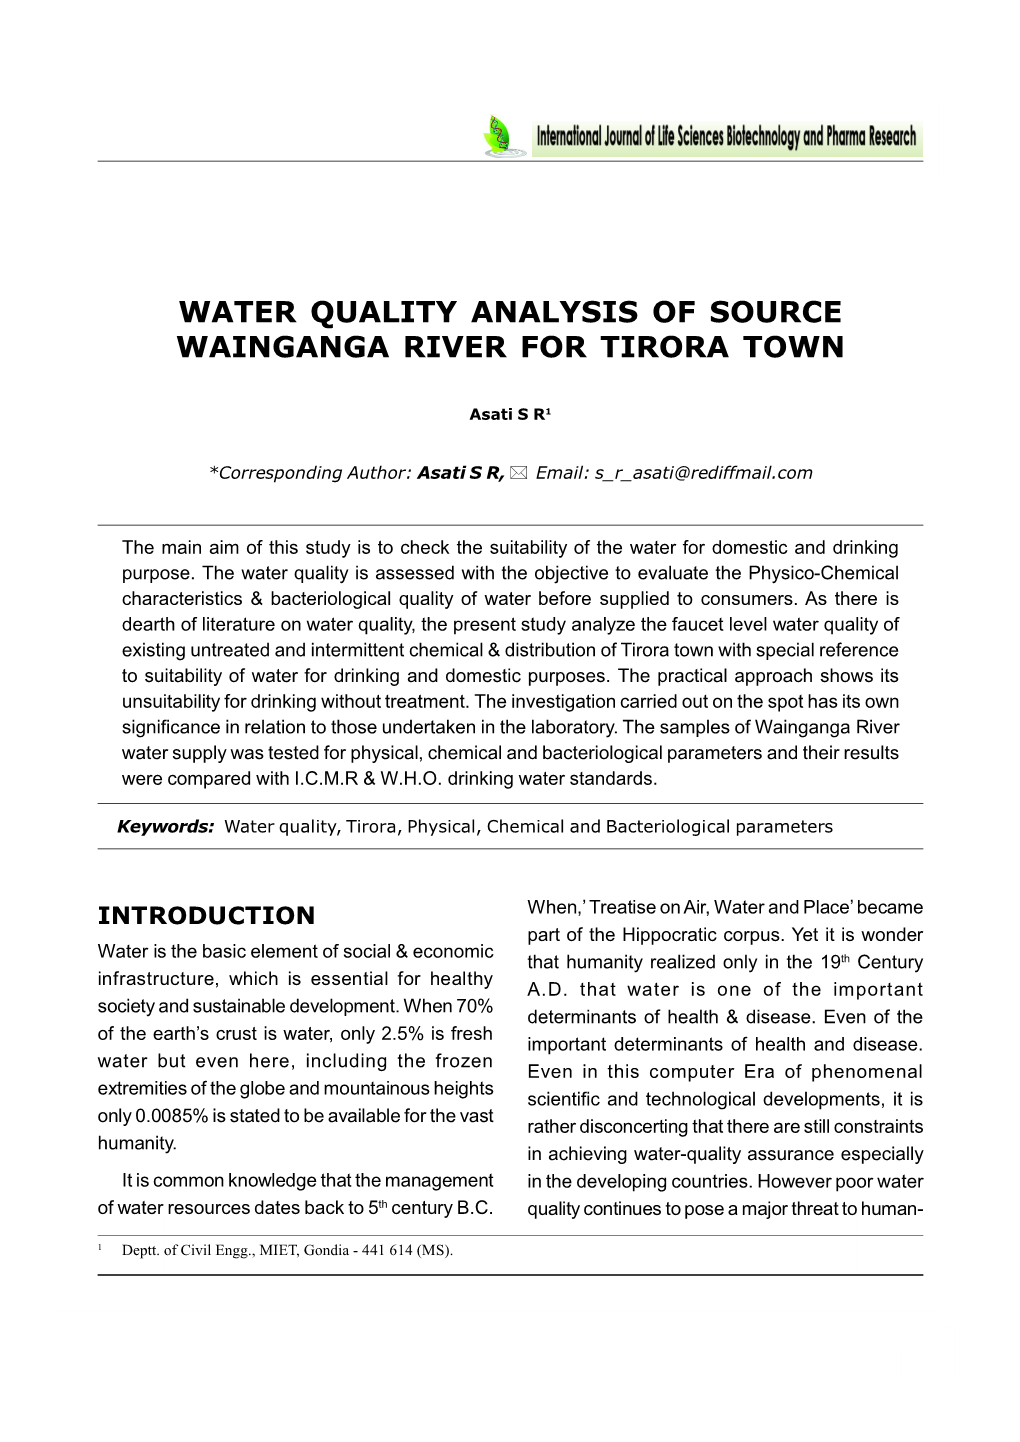 Water Quality Analysis of Source Wainganga River for Tirora Town